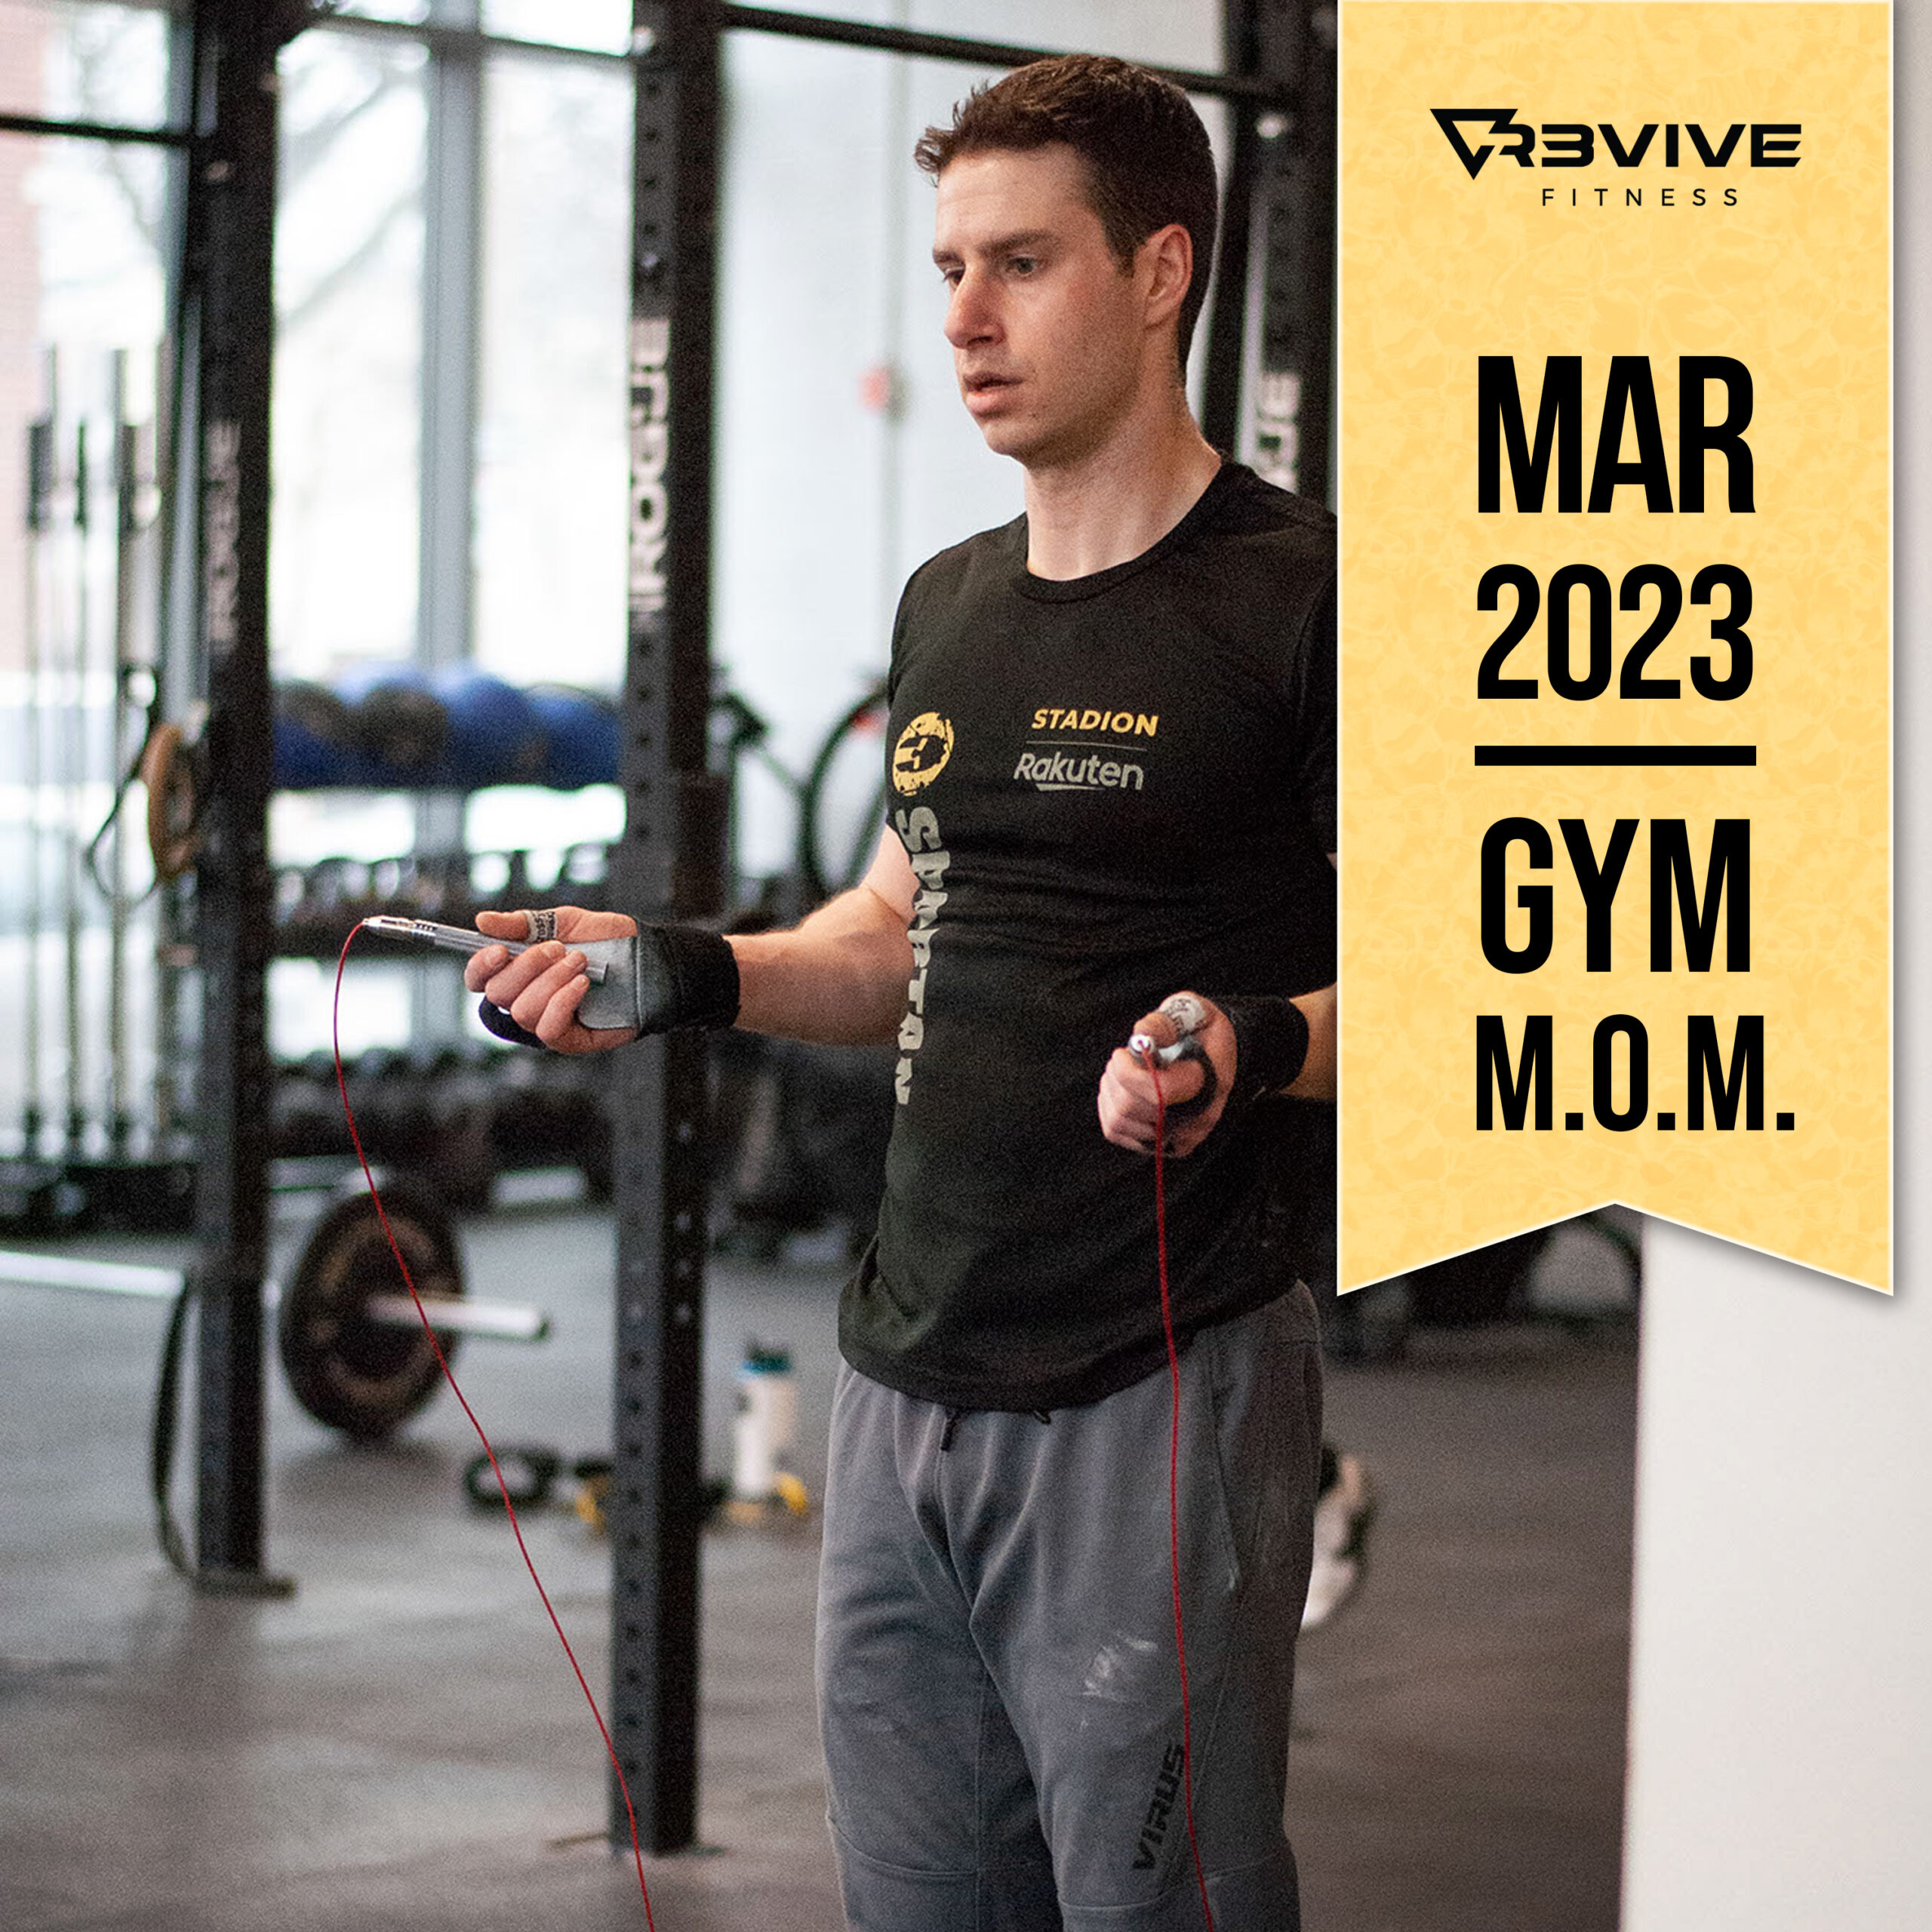 March 2023's gym MOM, Josh!